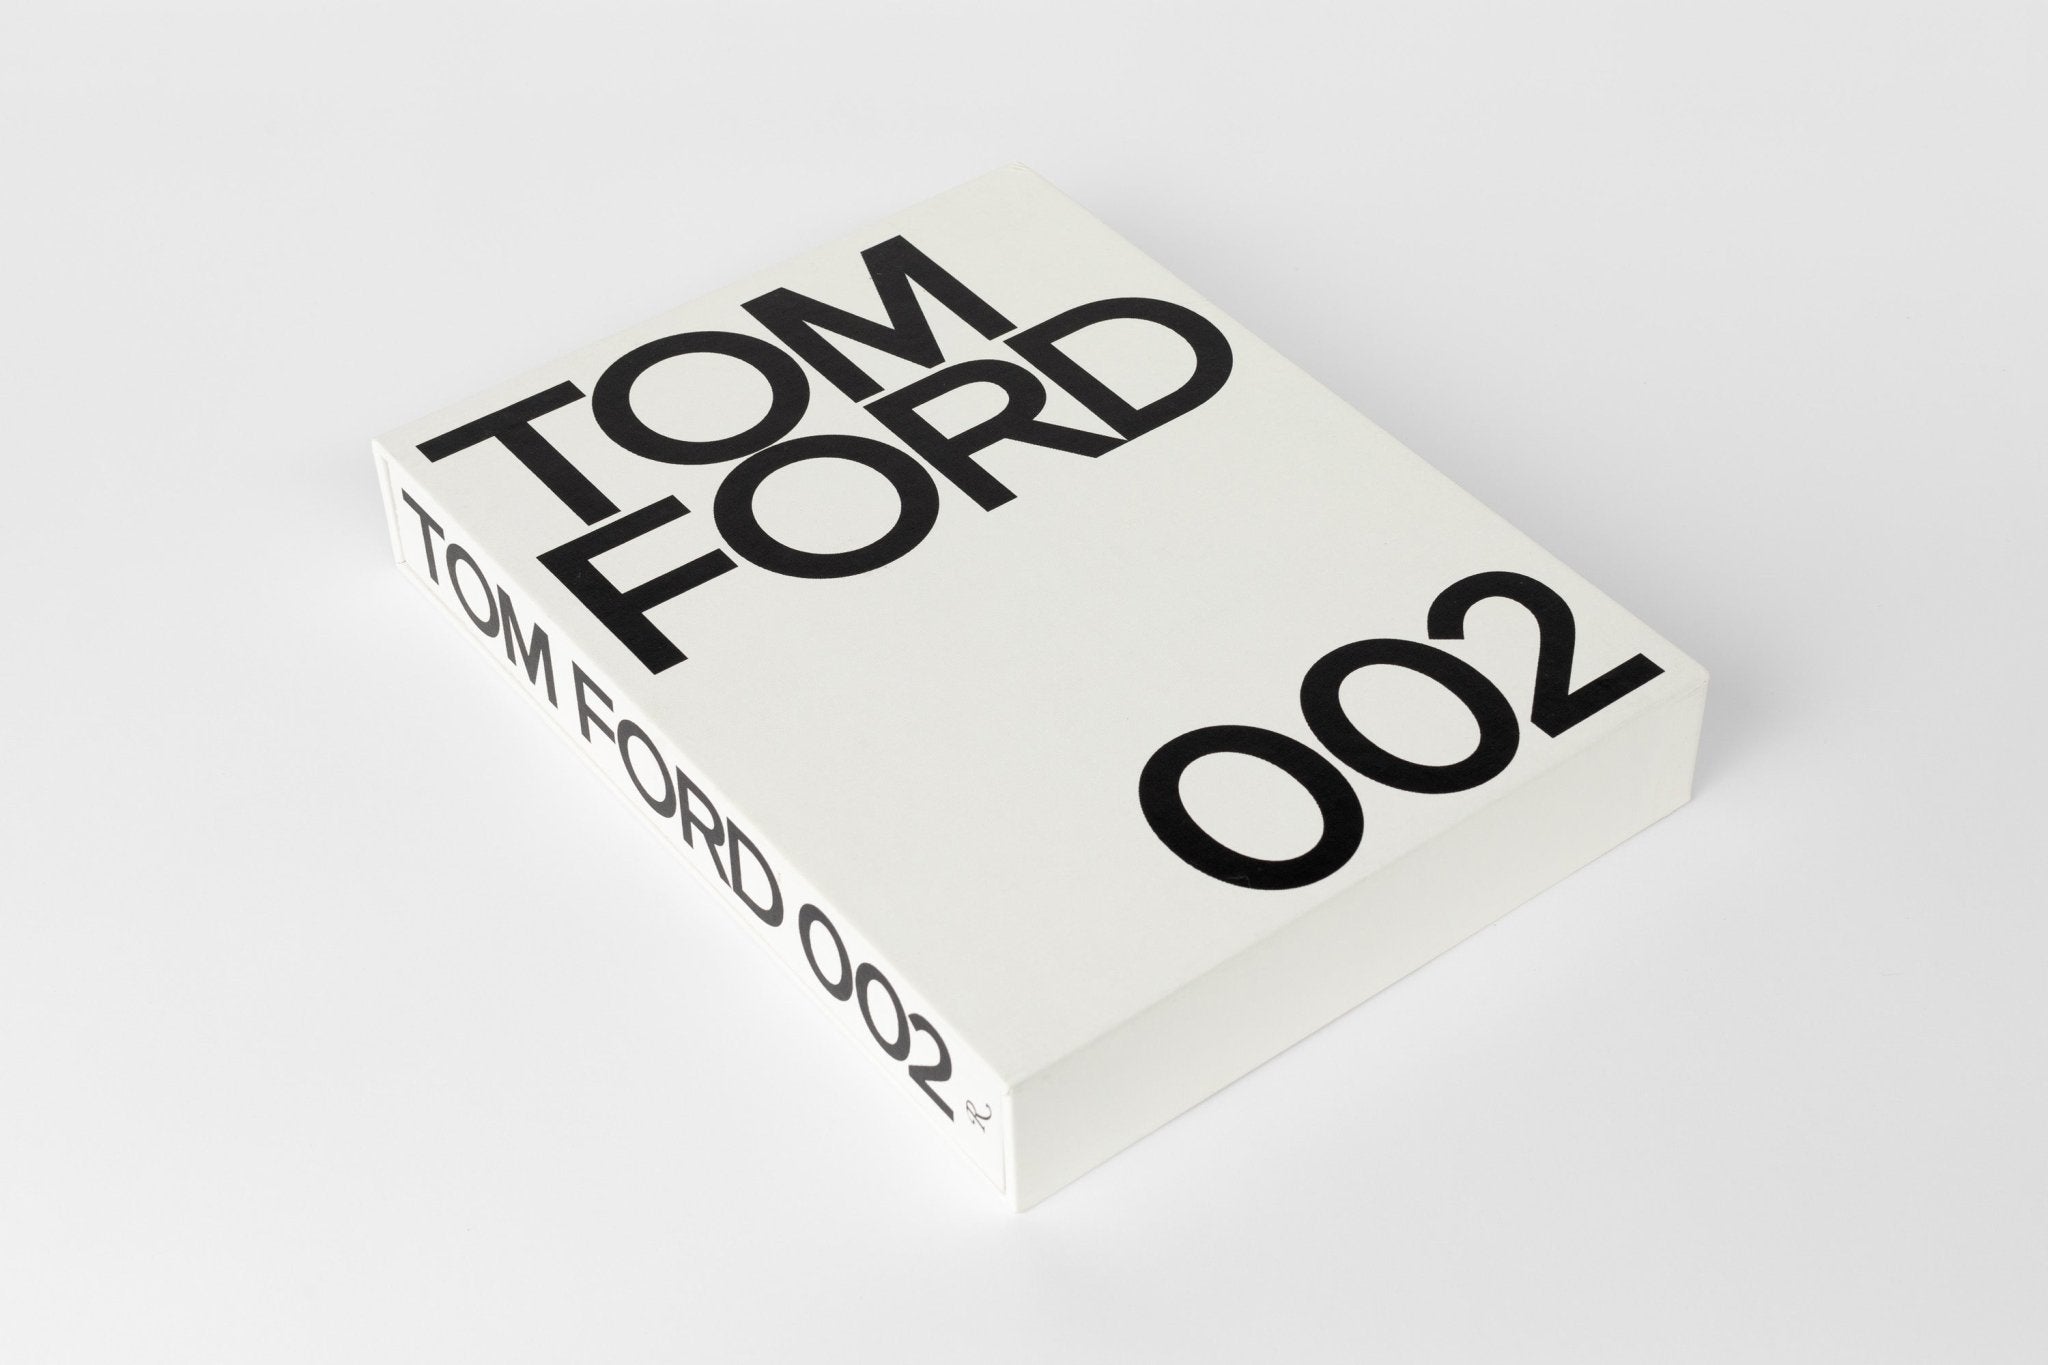 New Tom Ford Coffee table book 002 #tomford002 #tomfordbook